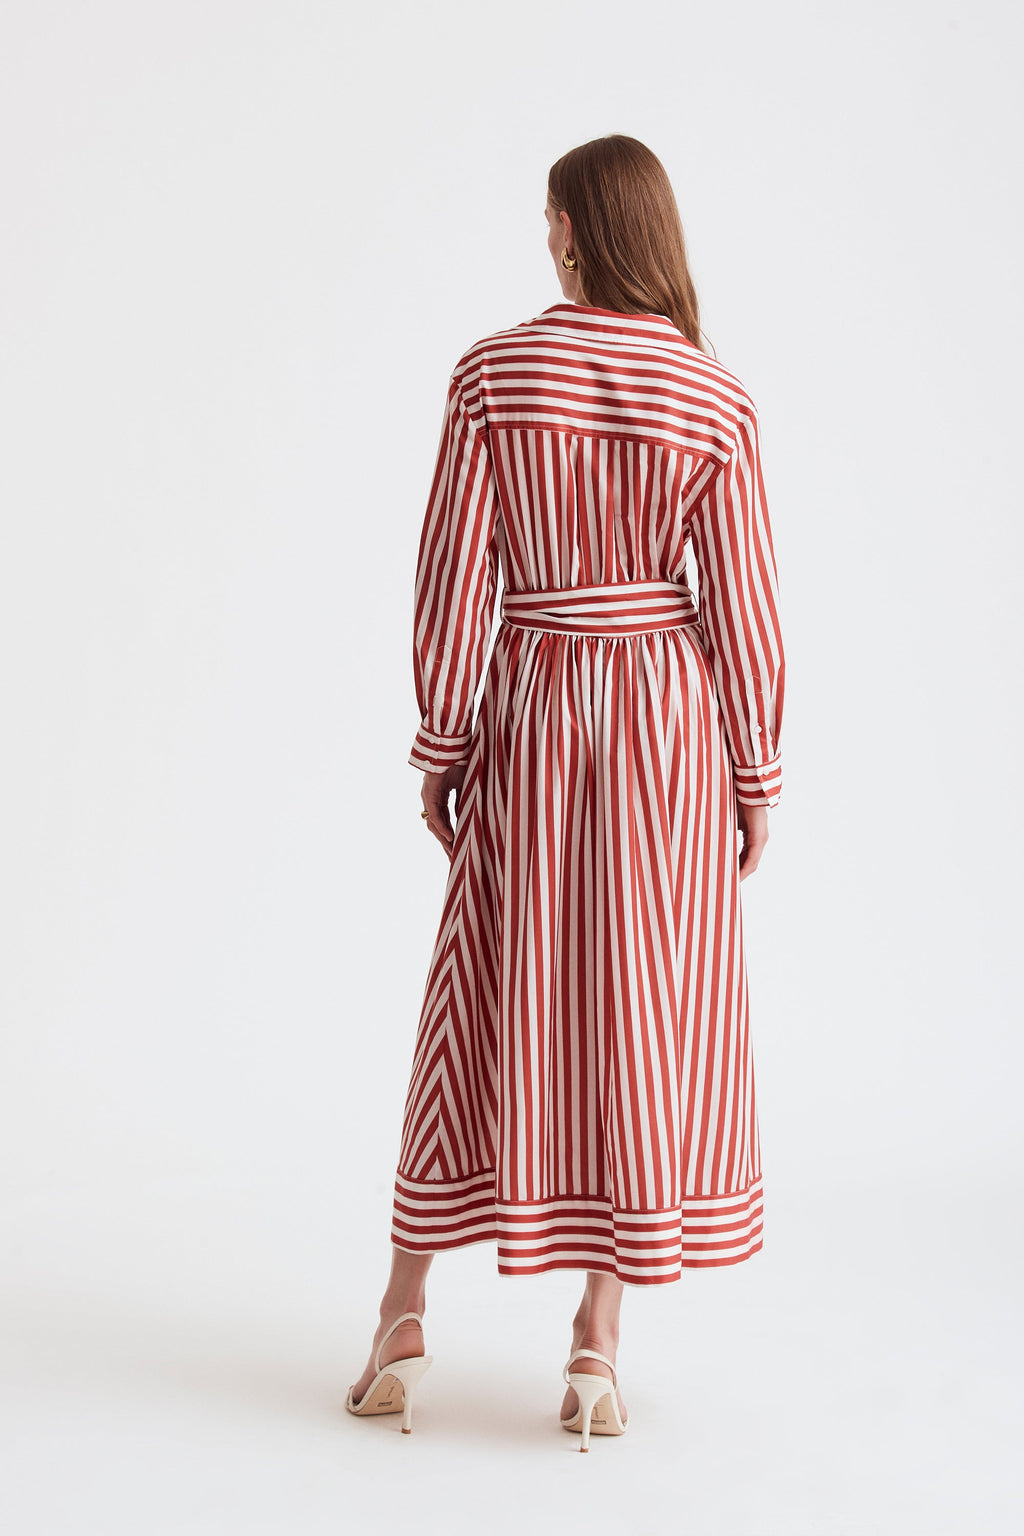 Toccin - Eva Shirt Dress - Rust Stripe